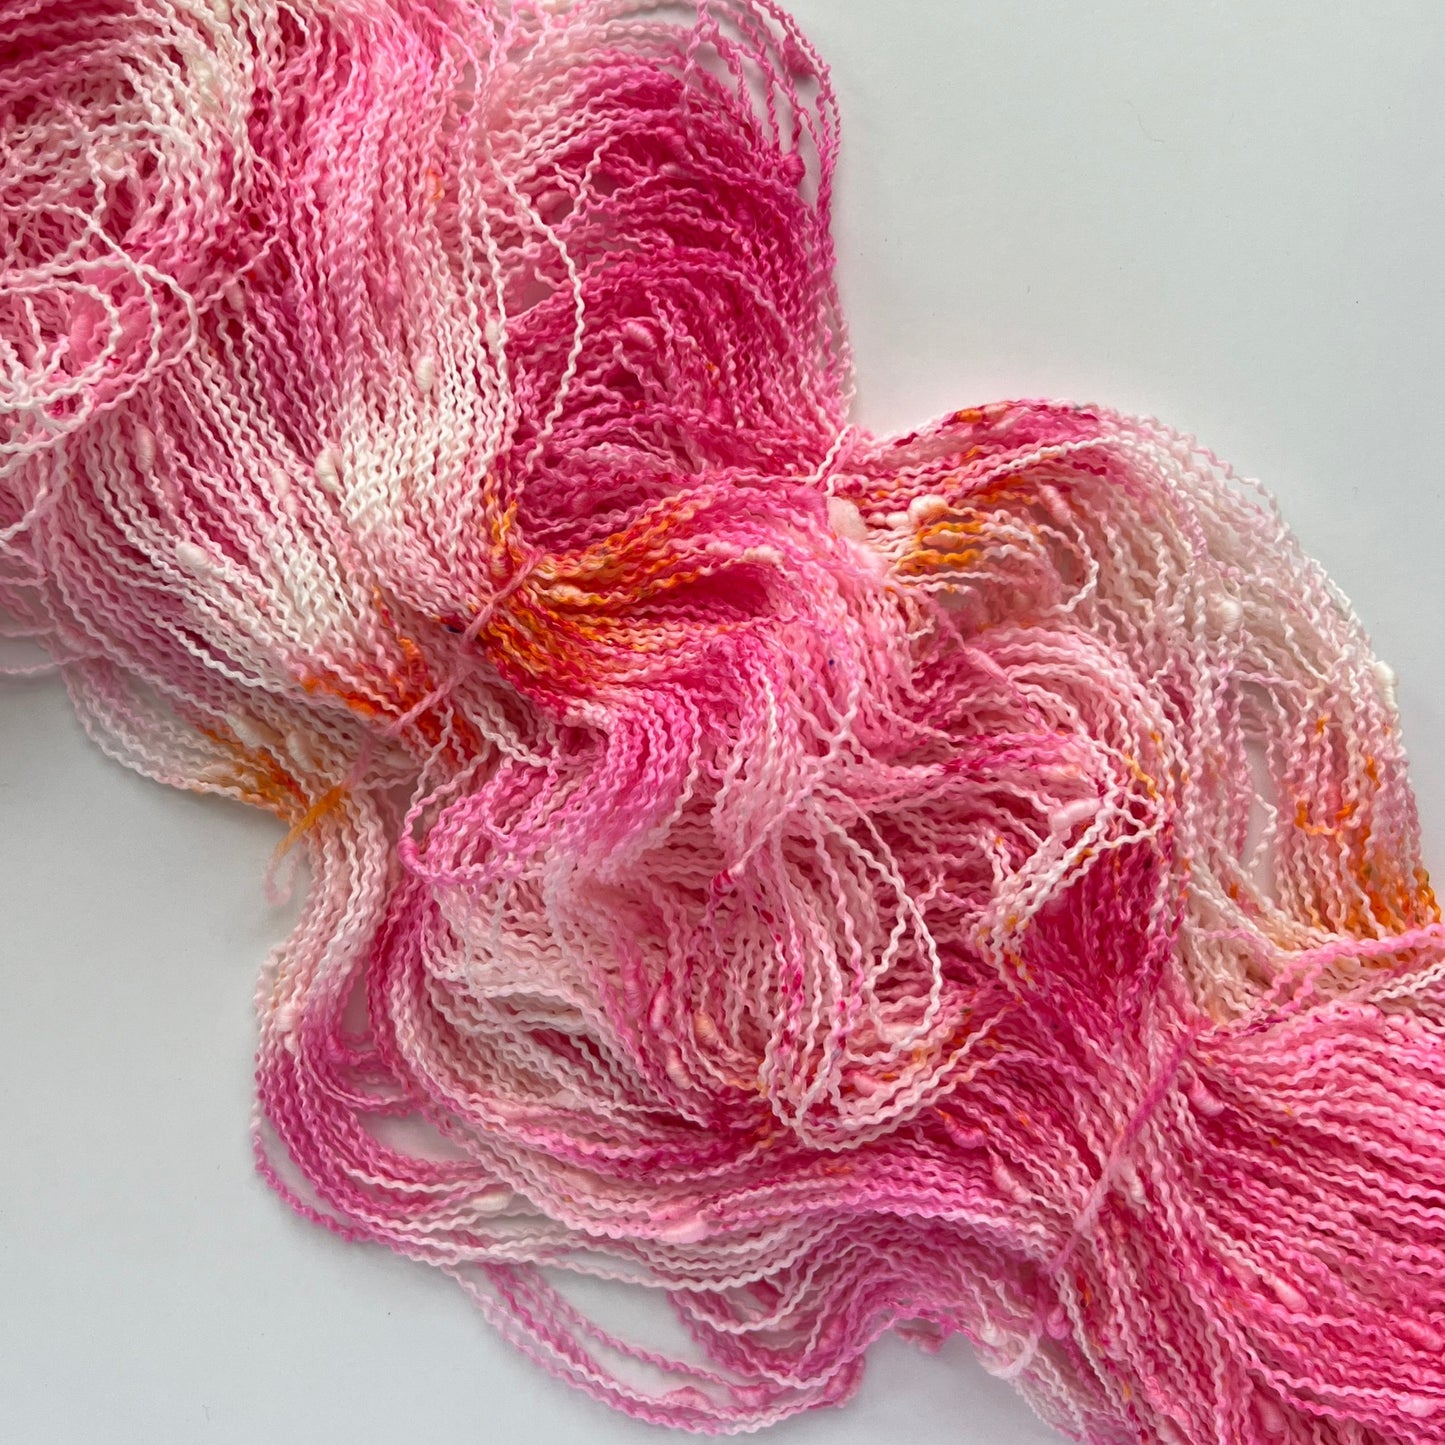 Summer Camp Fibers Hand Dyed Textured Yarn - Goosebumps - Cherry Blossom Canopy